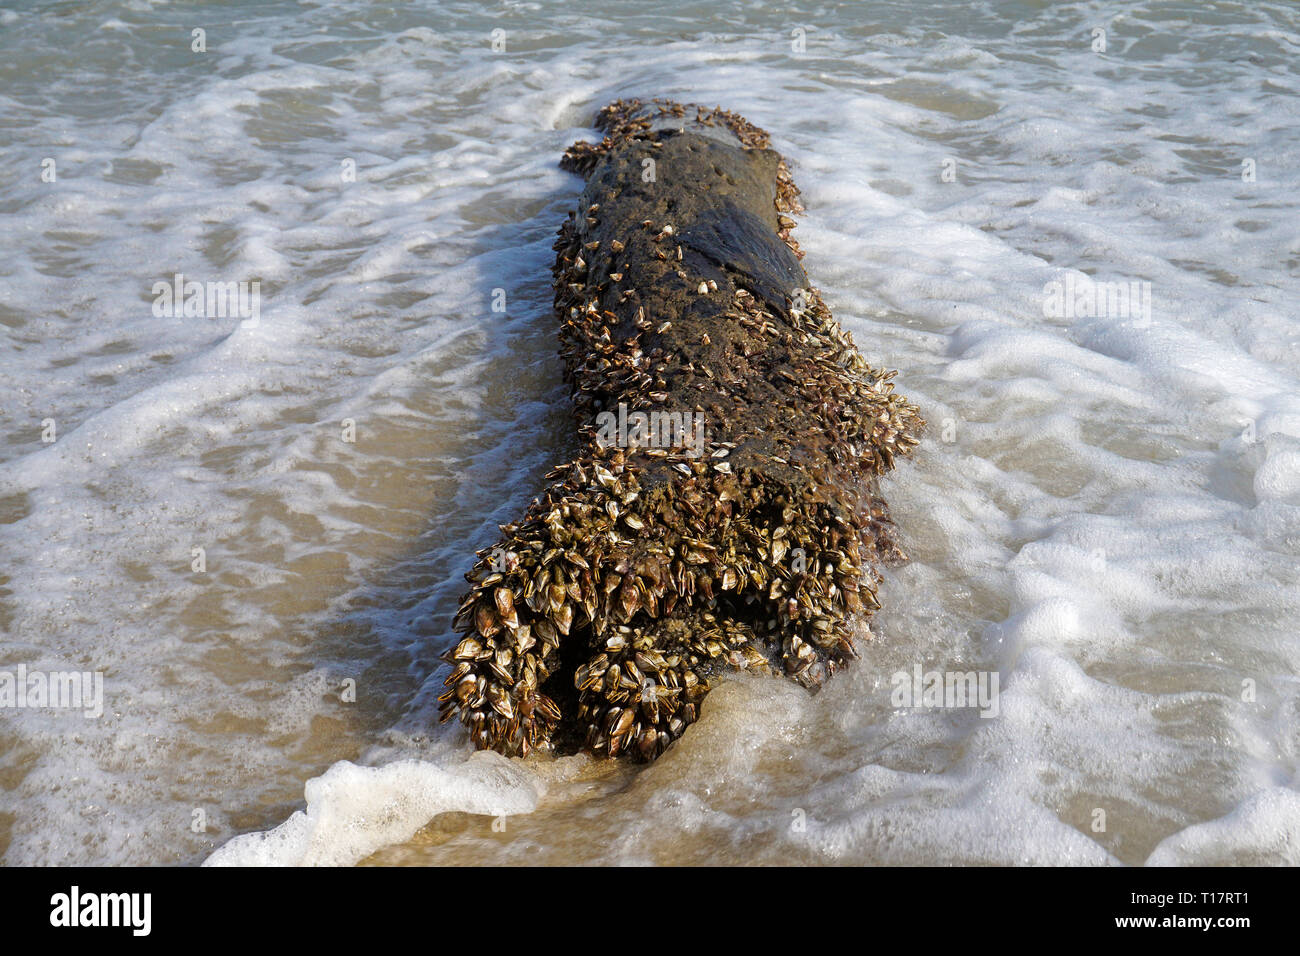 Goose cirripedi (Pedunculata) ricoperta di una lavata fino tronco, Lamai Beach, Koh Samui, Golfo di Thailandia, Tailandia Foto Stock